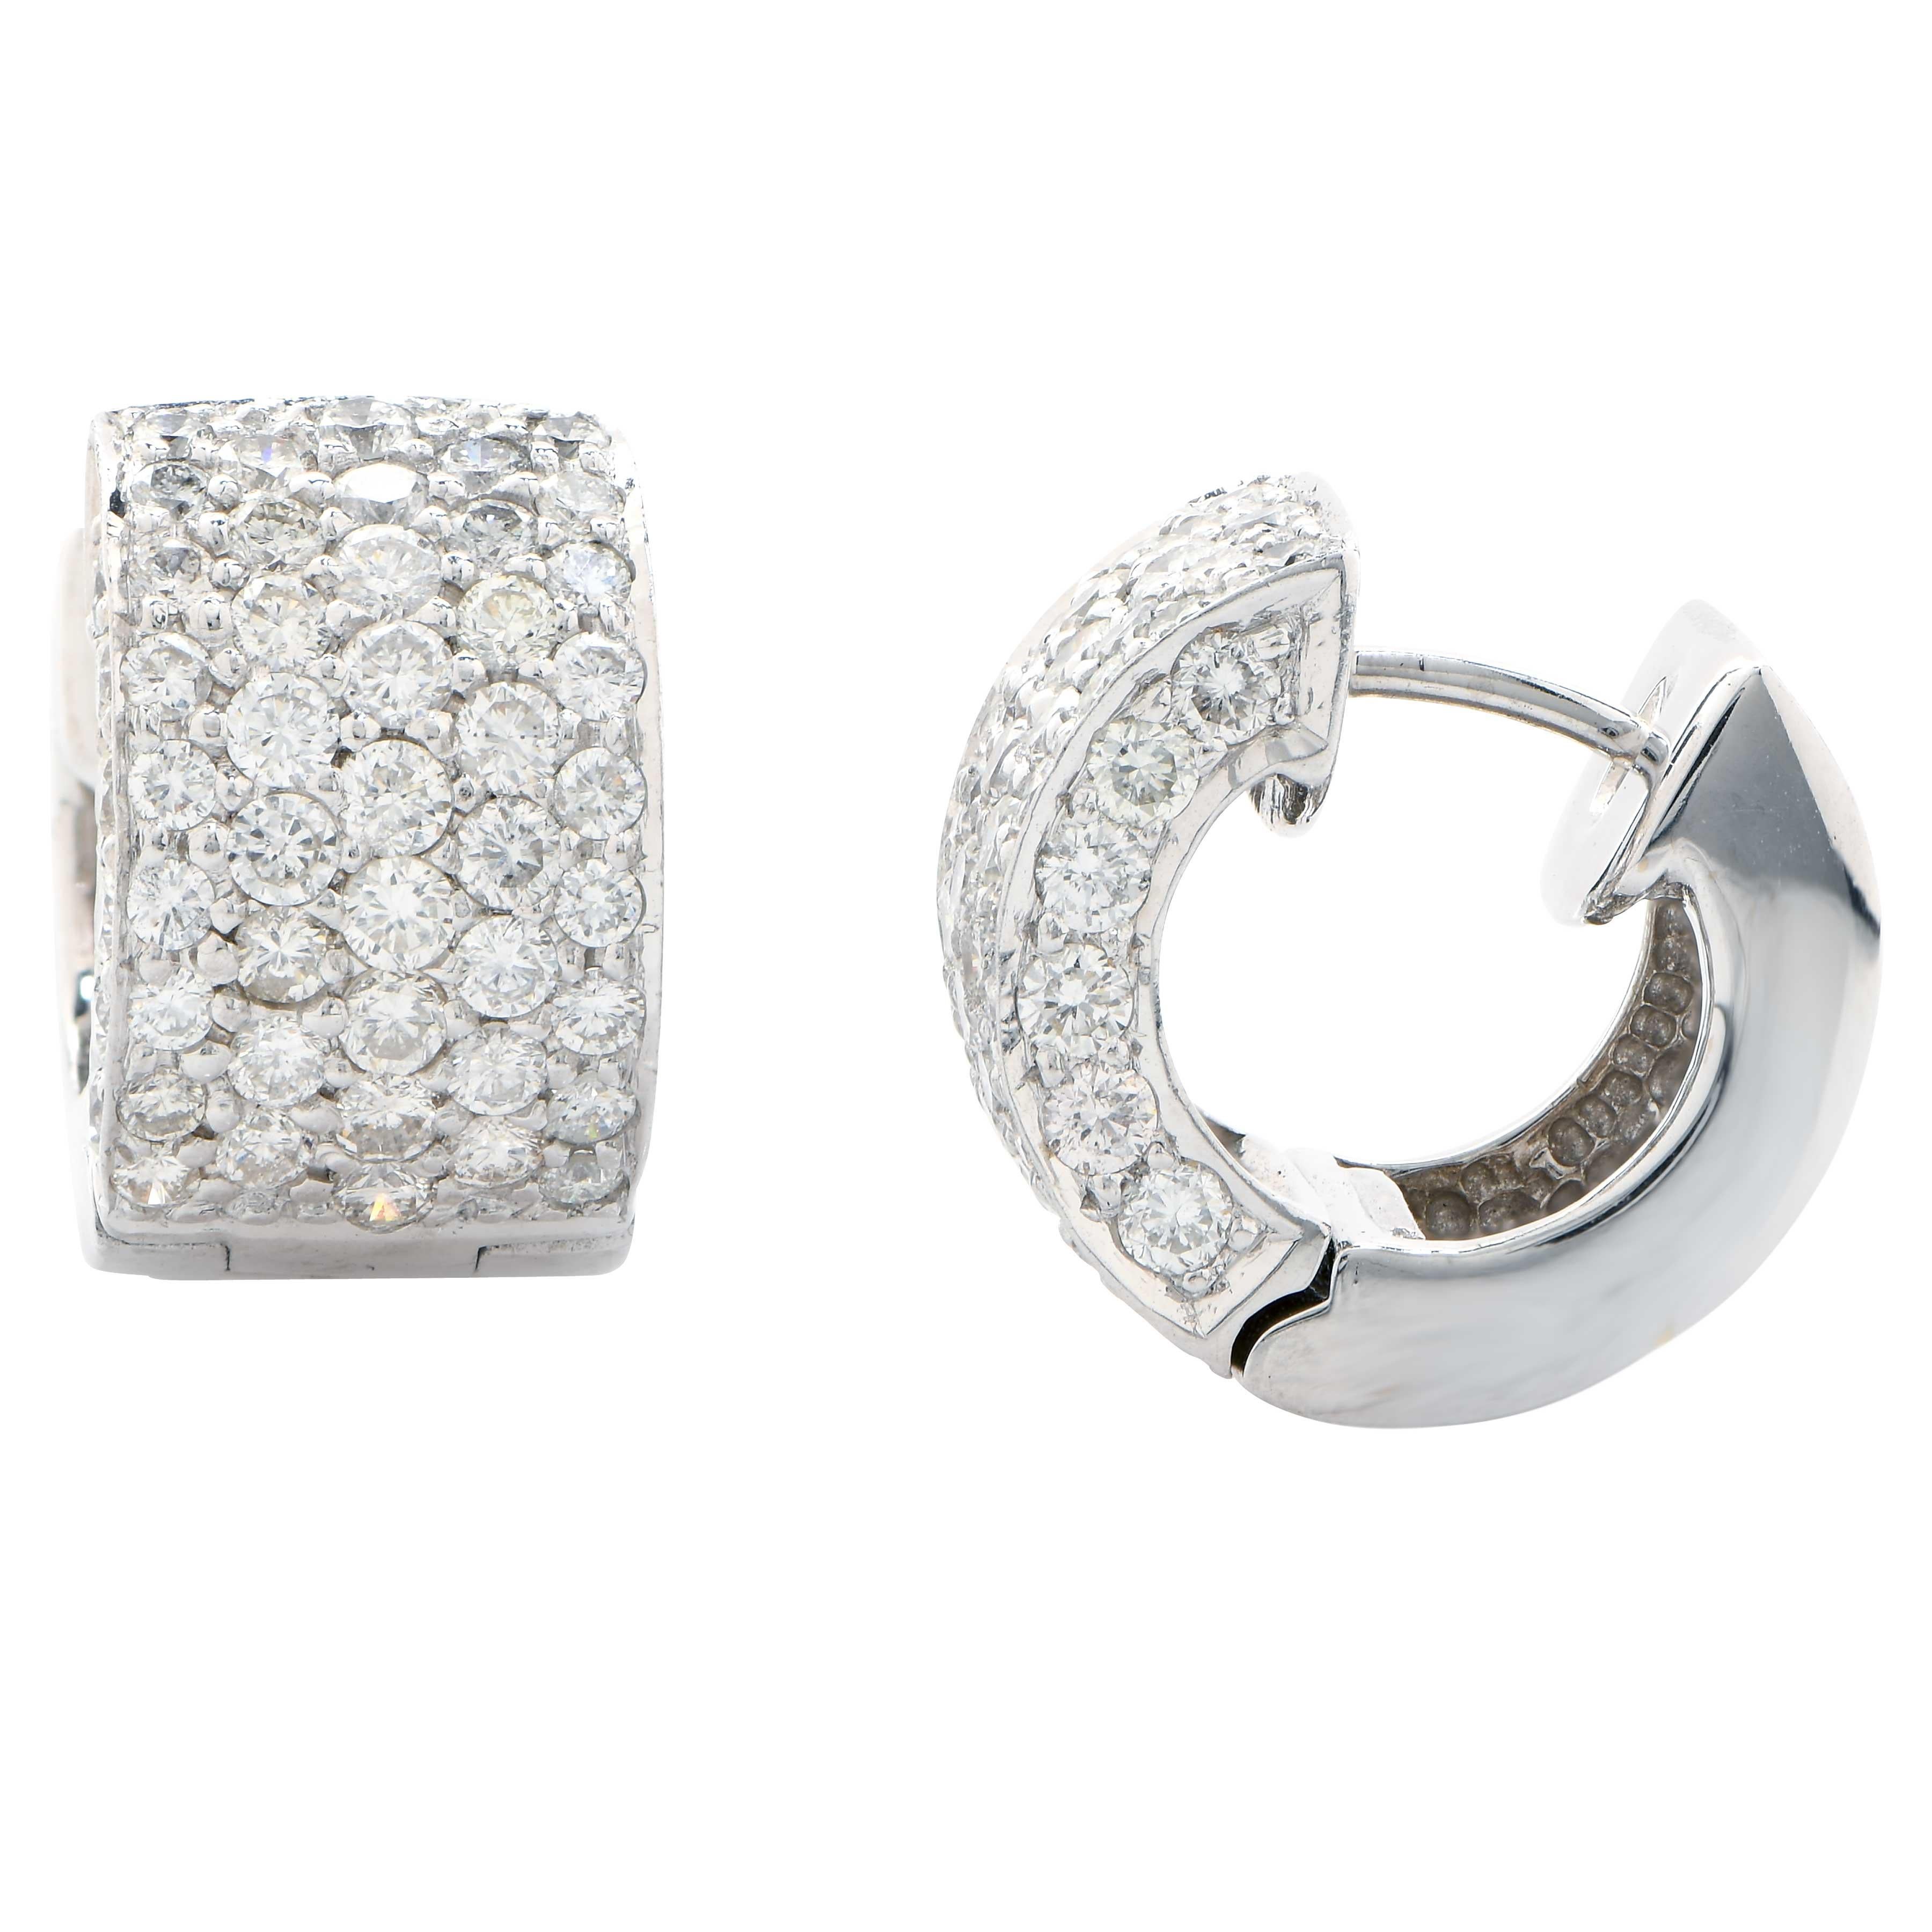 Round Cut 1.75 Carat Diamond Huggie Earrings in 18Karat White Gold For Sale